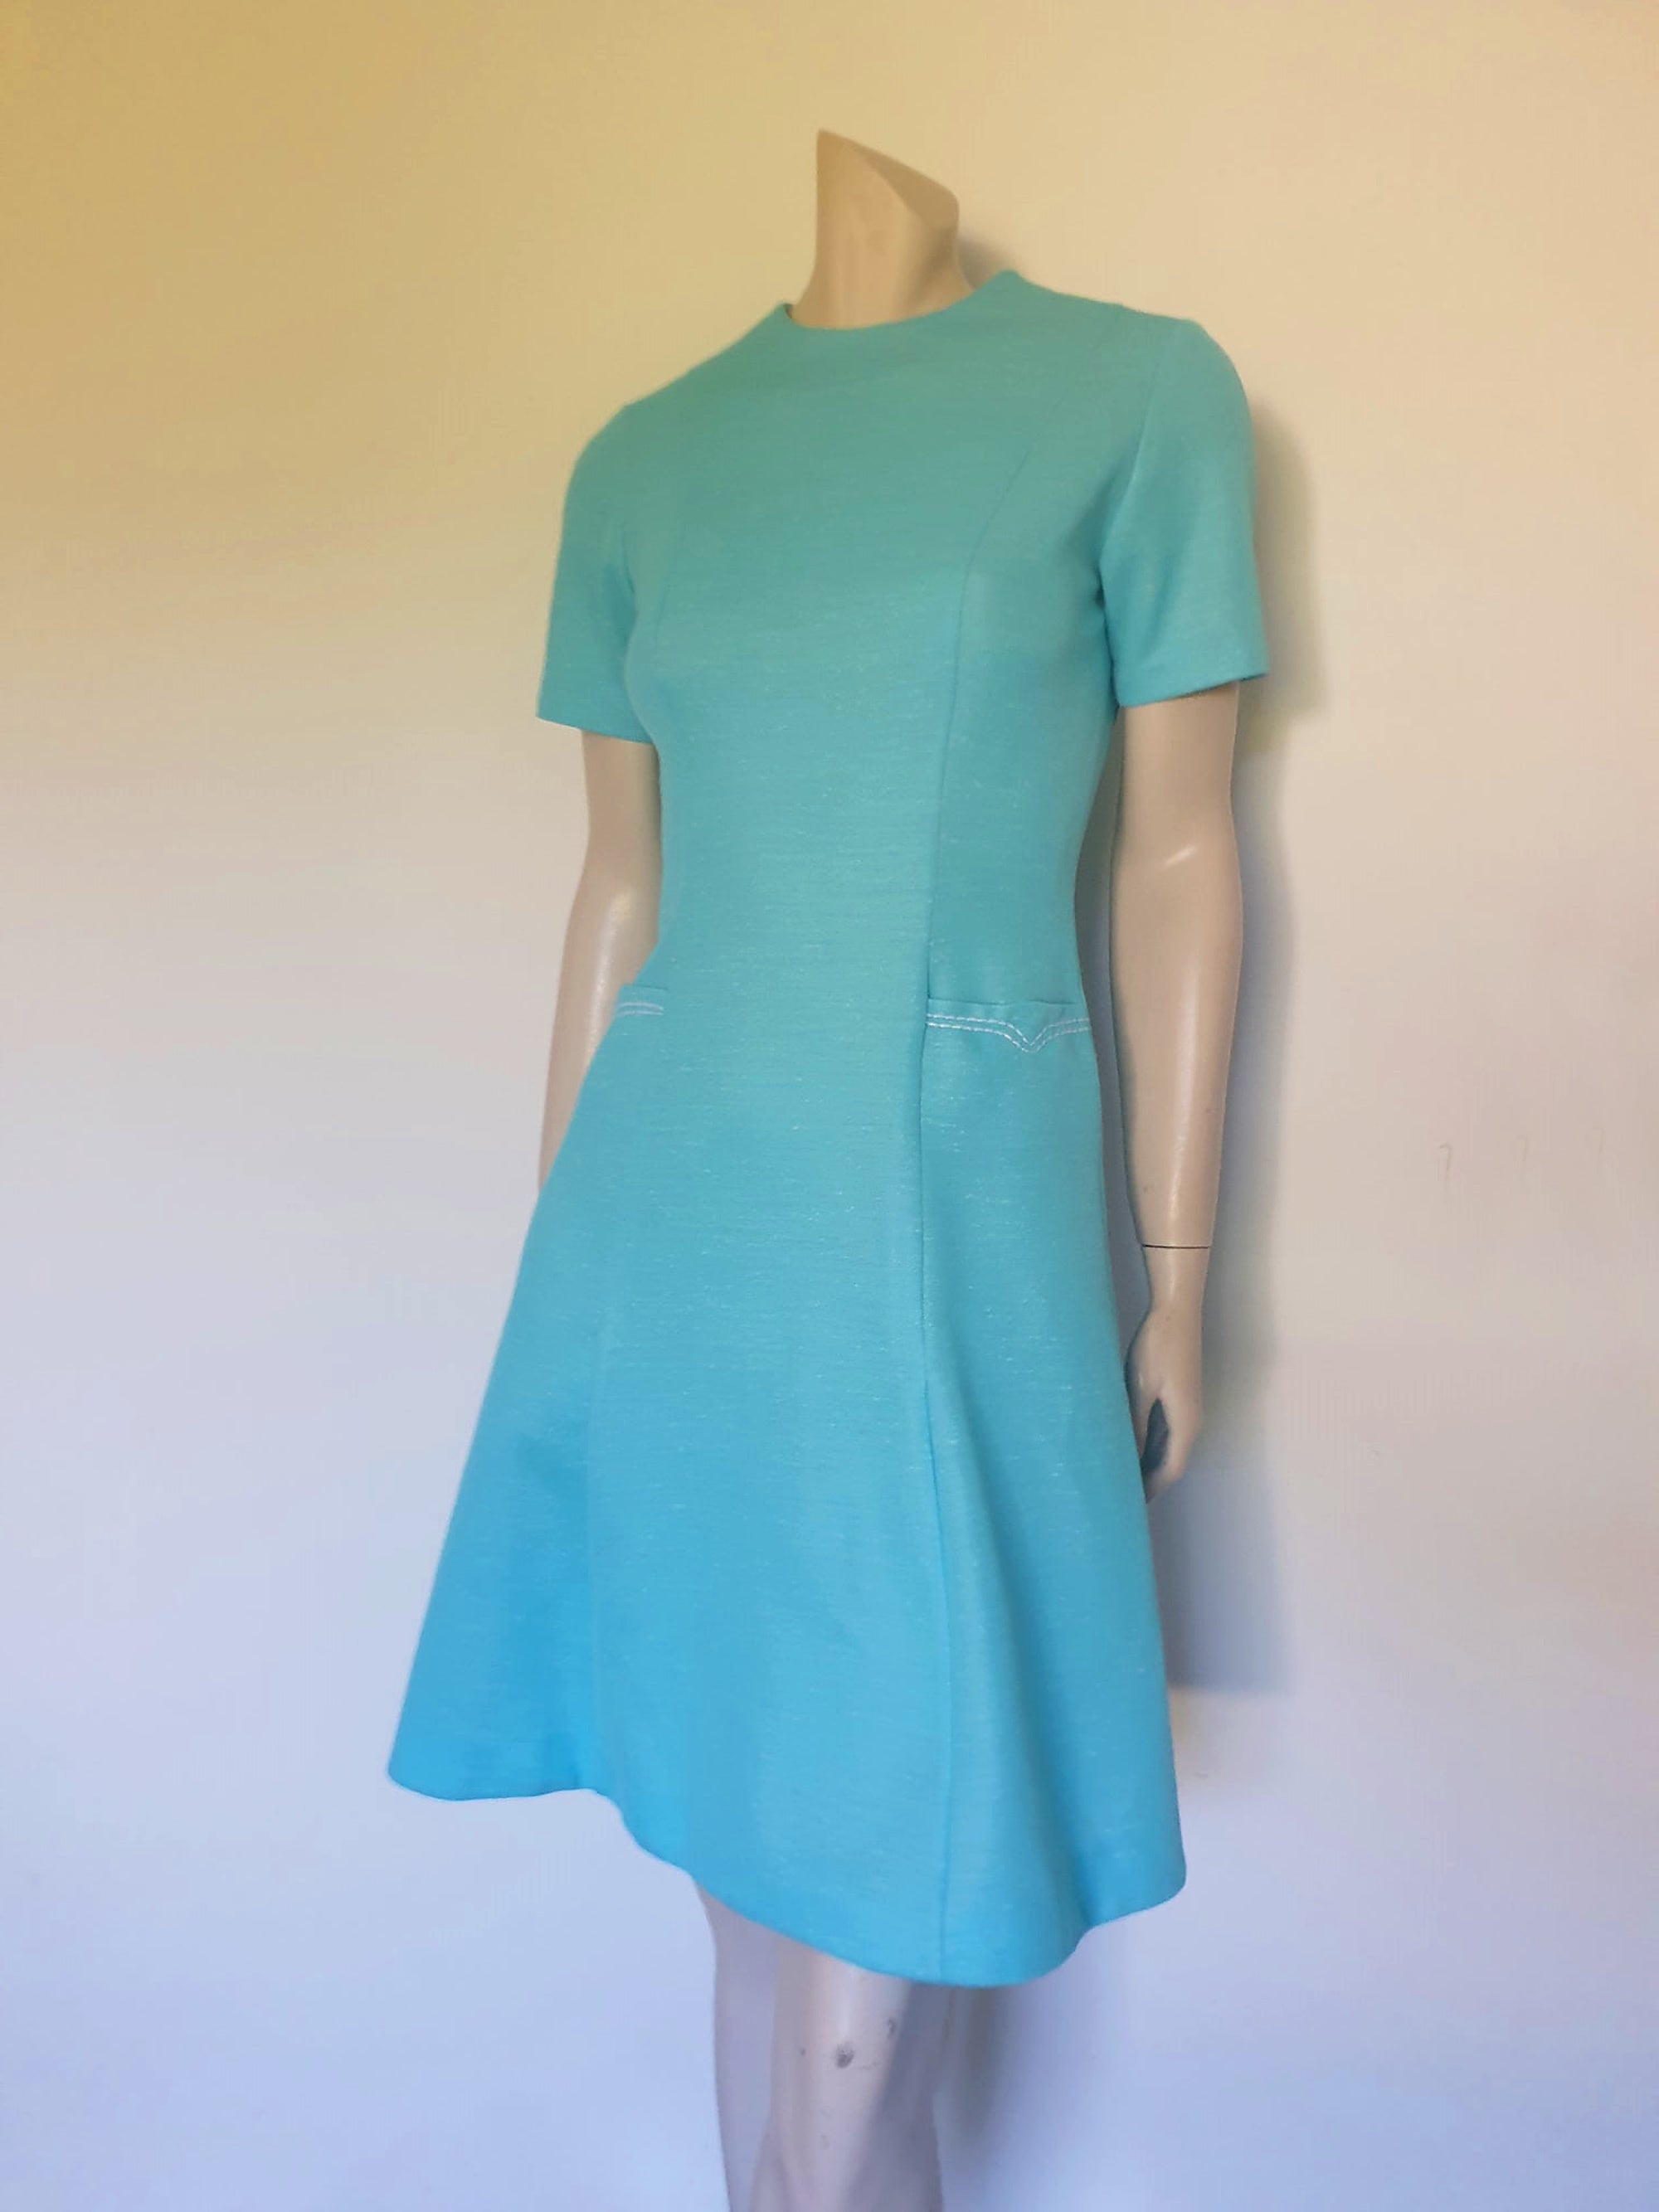 vintage 1960s mod style stretch jersey aqua blue dress small